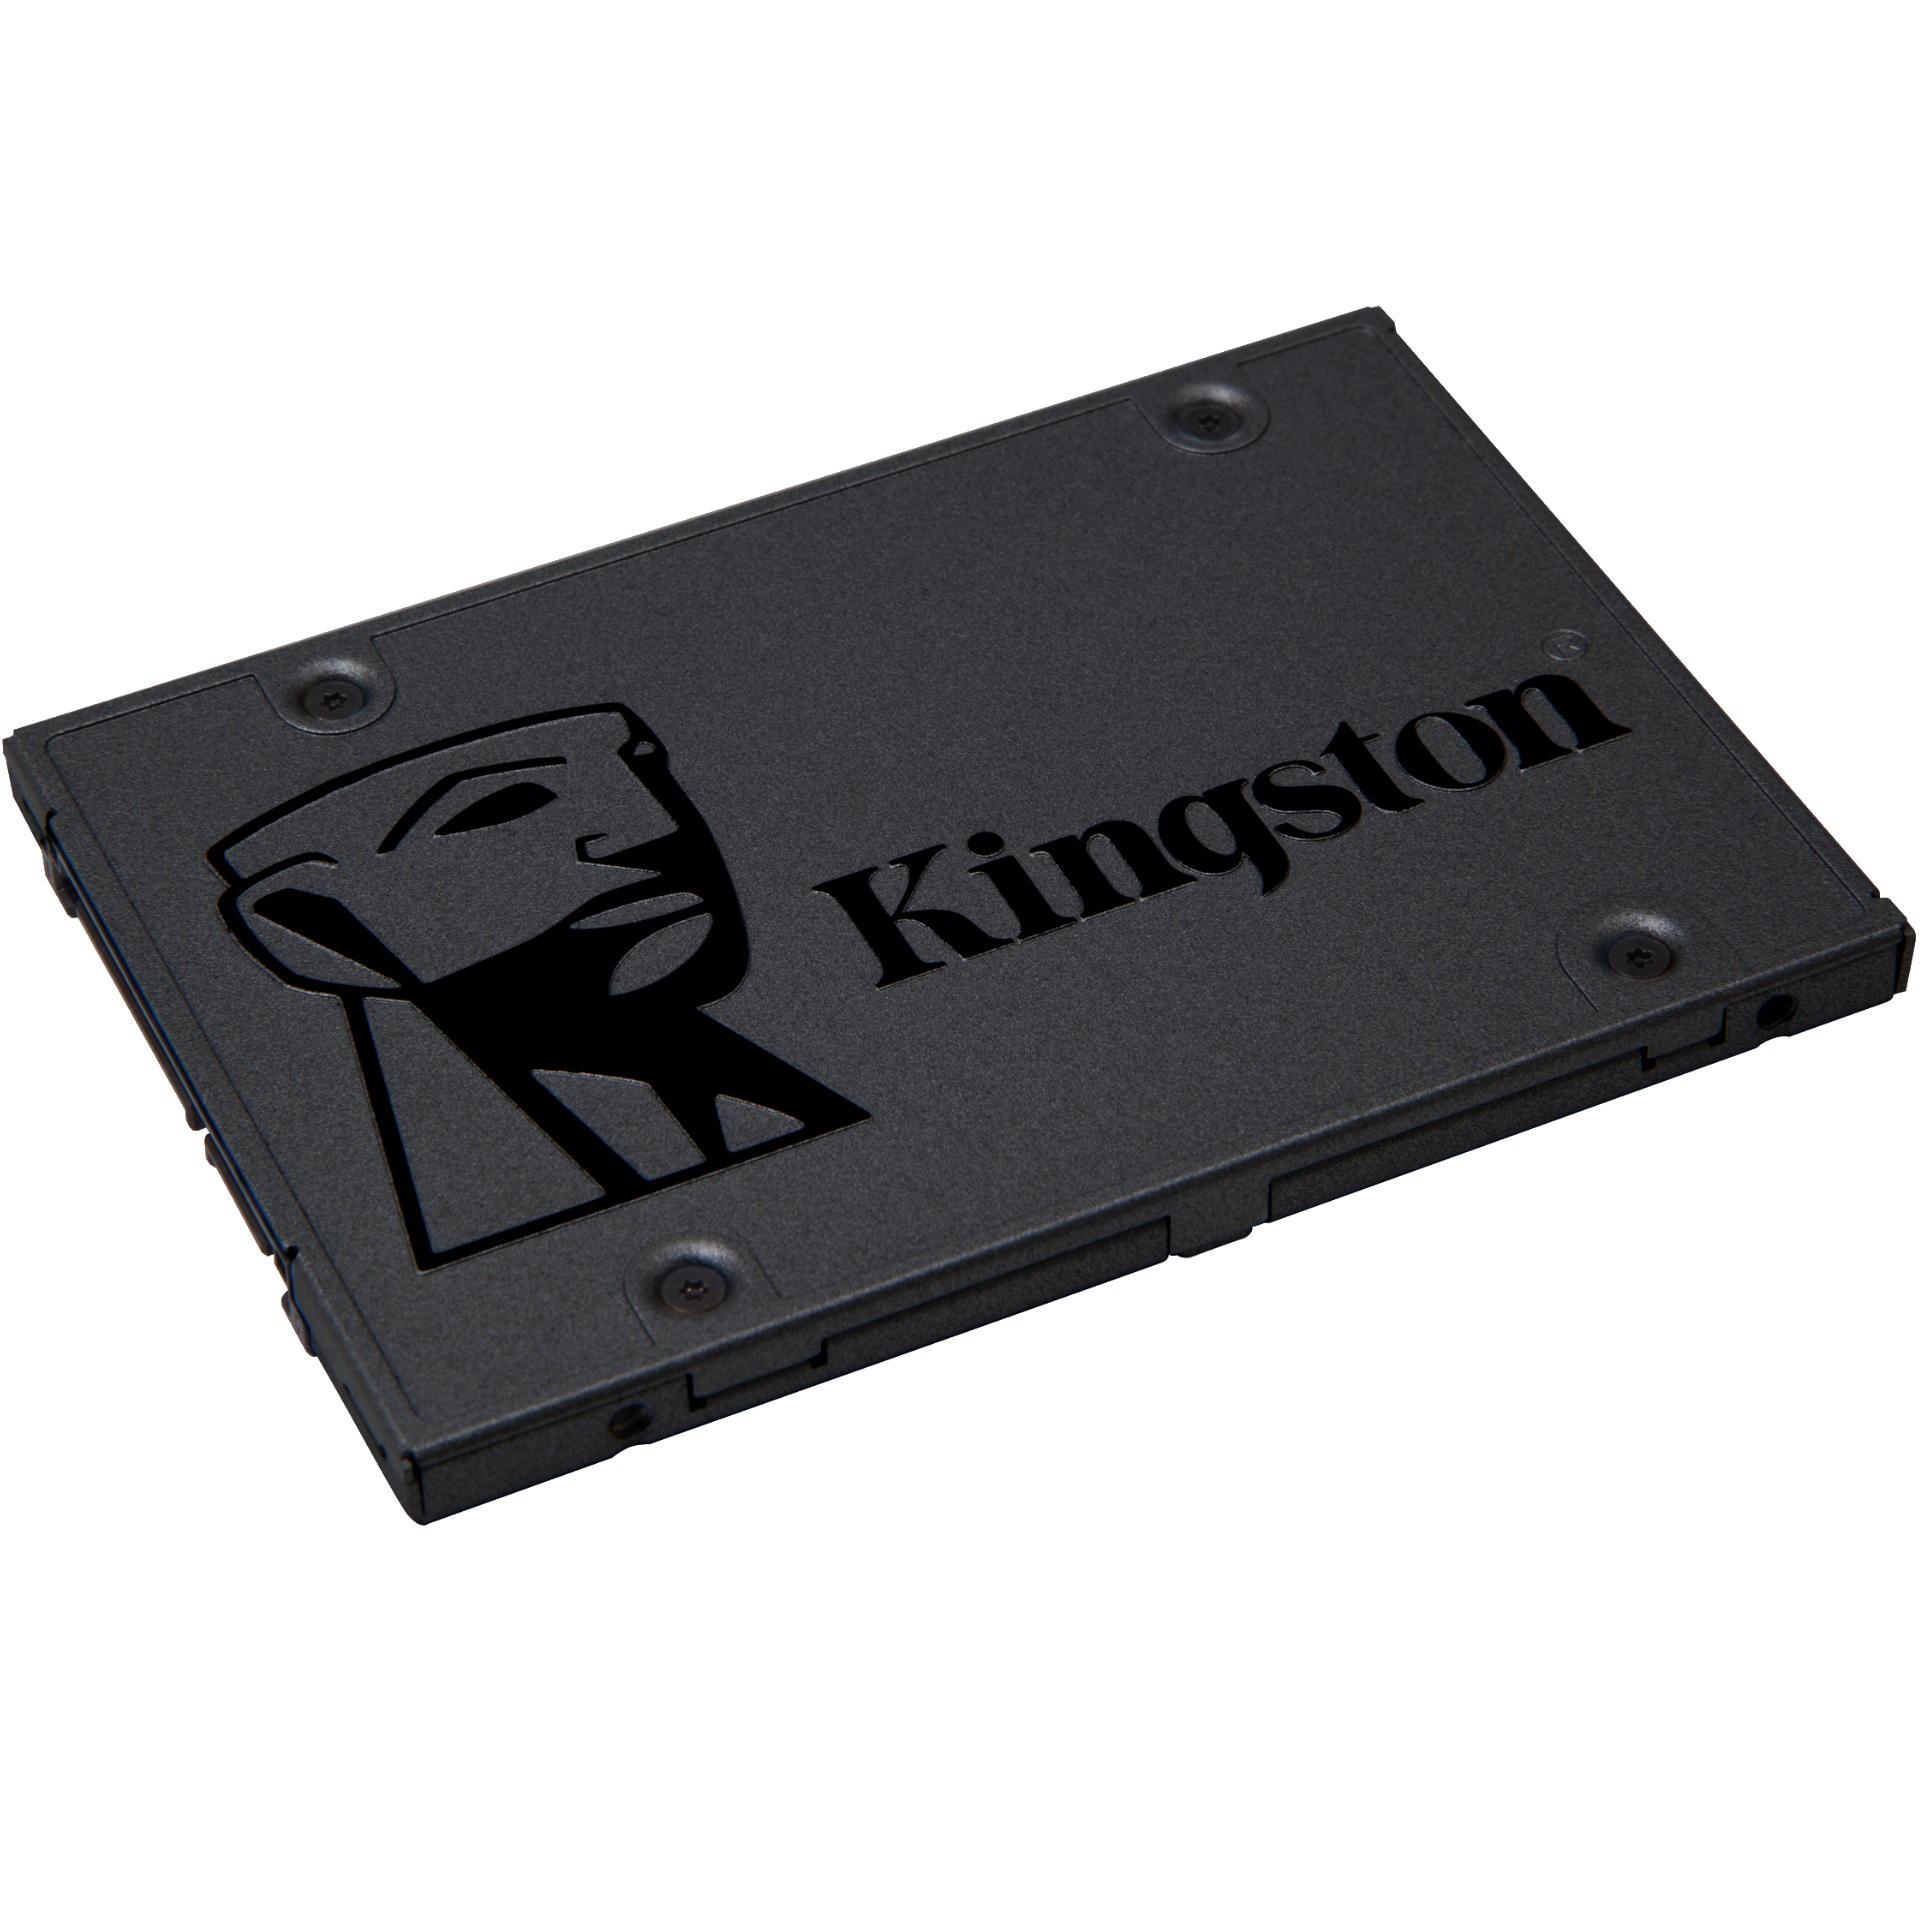 Kingston A400 240GB SATA 6Gb/s 2.5" Solid State Hard Drive - (SA400S37/240G)